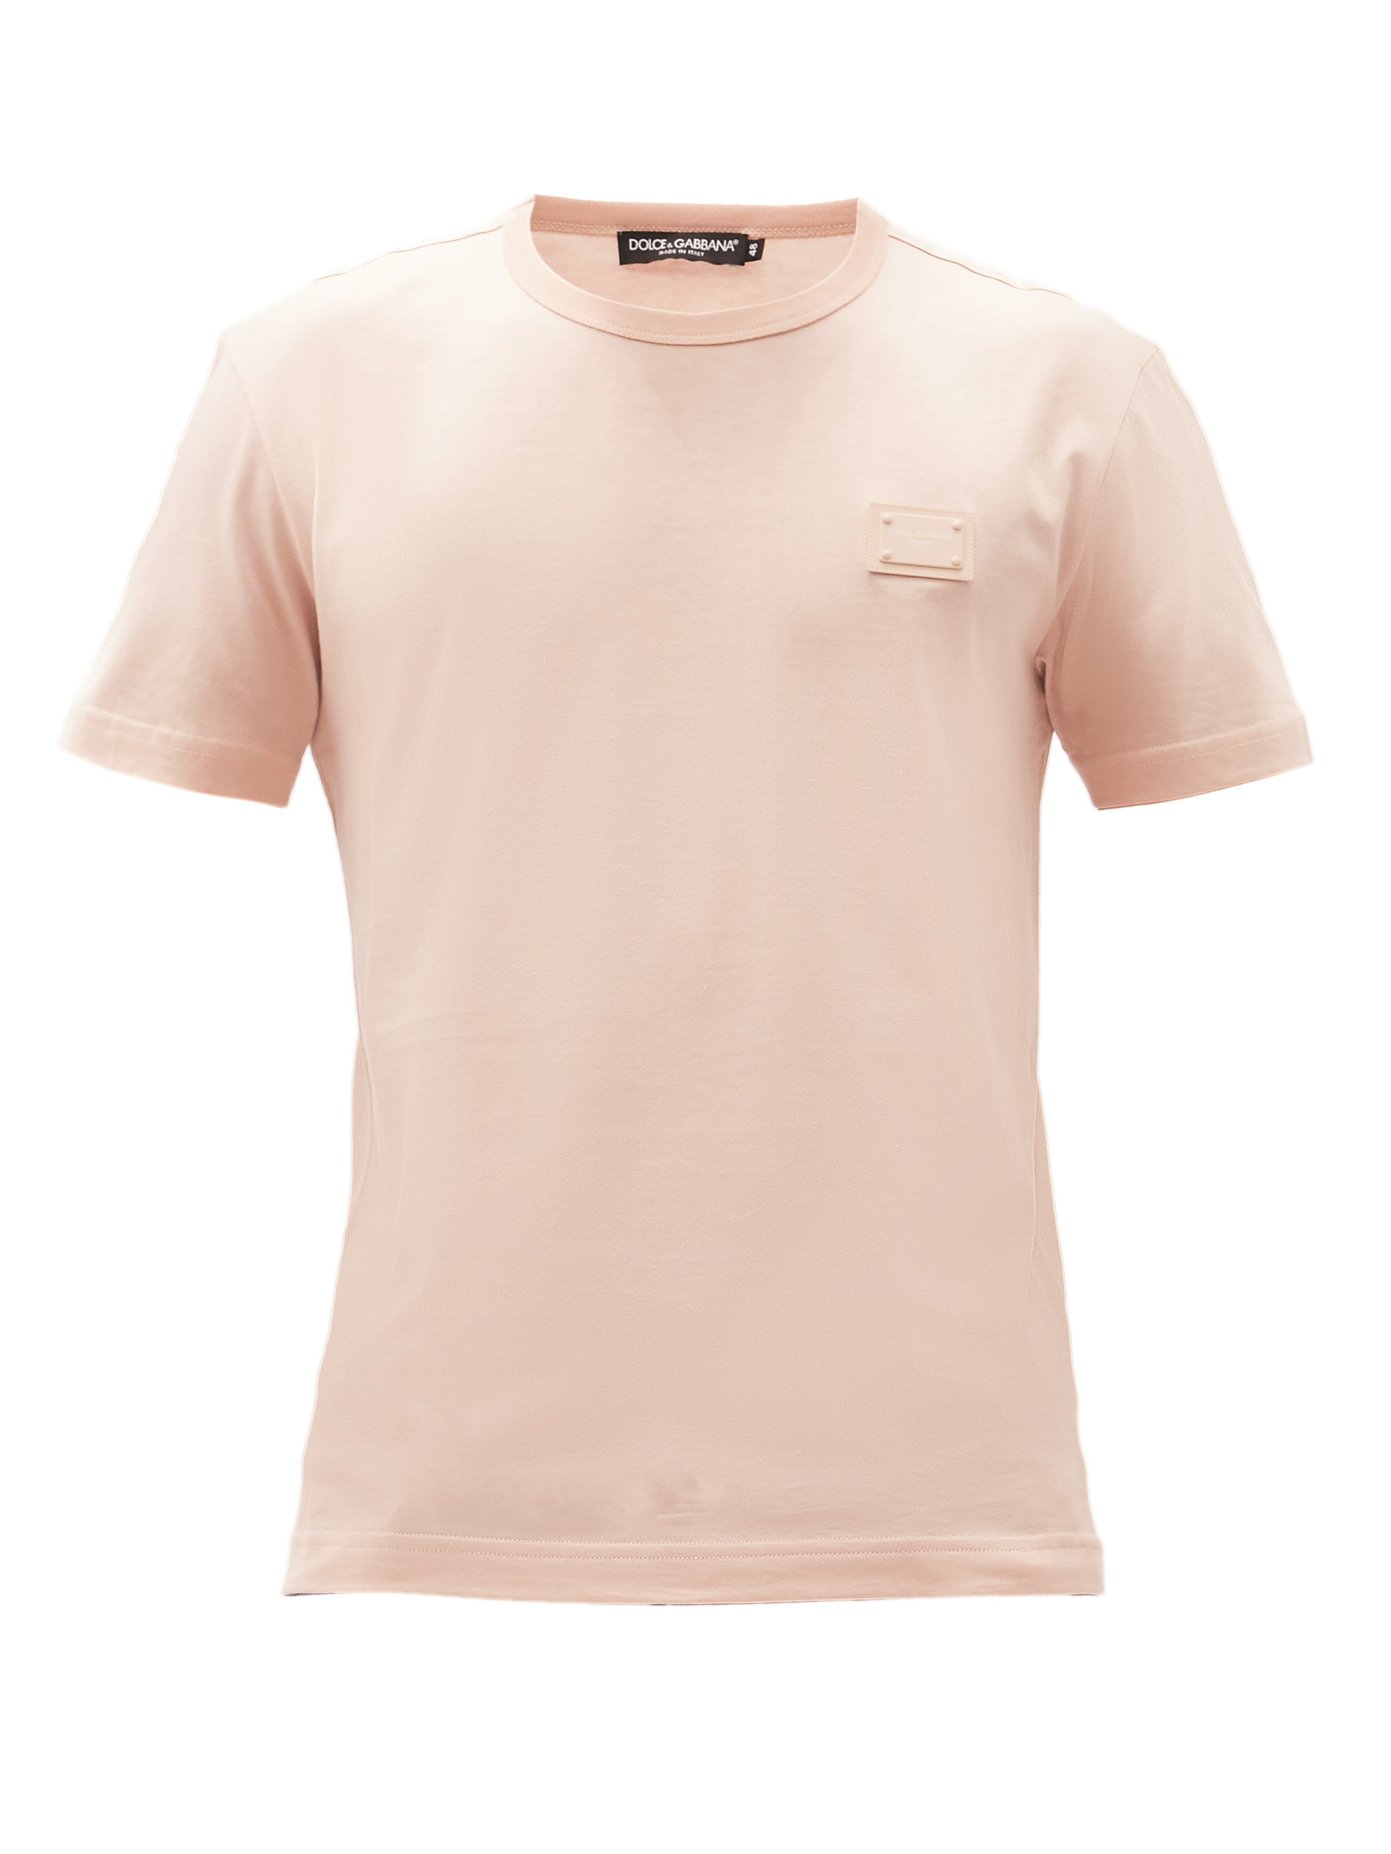 dolce and gabbana pink t shirt